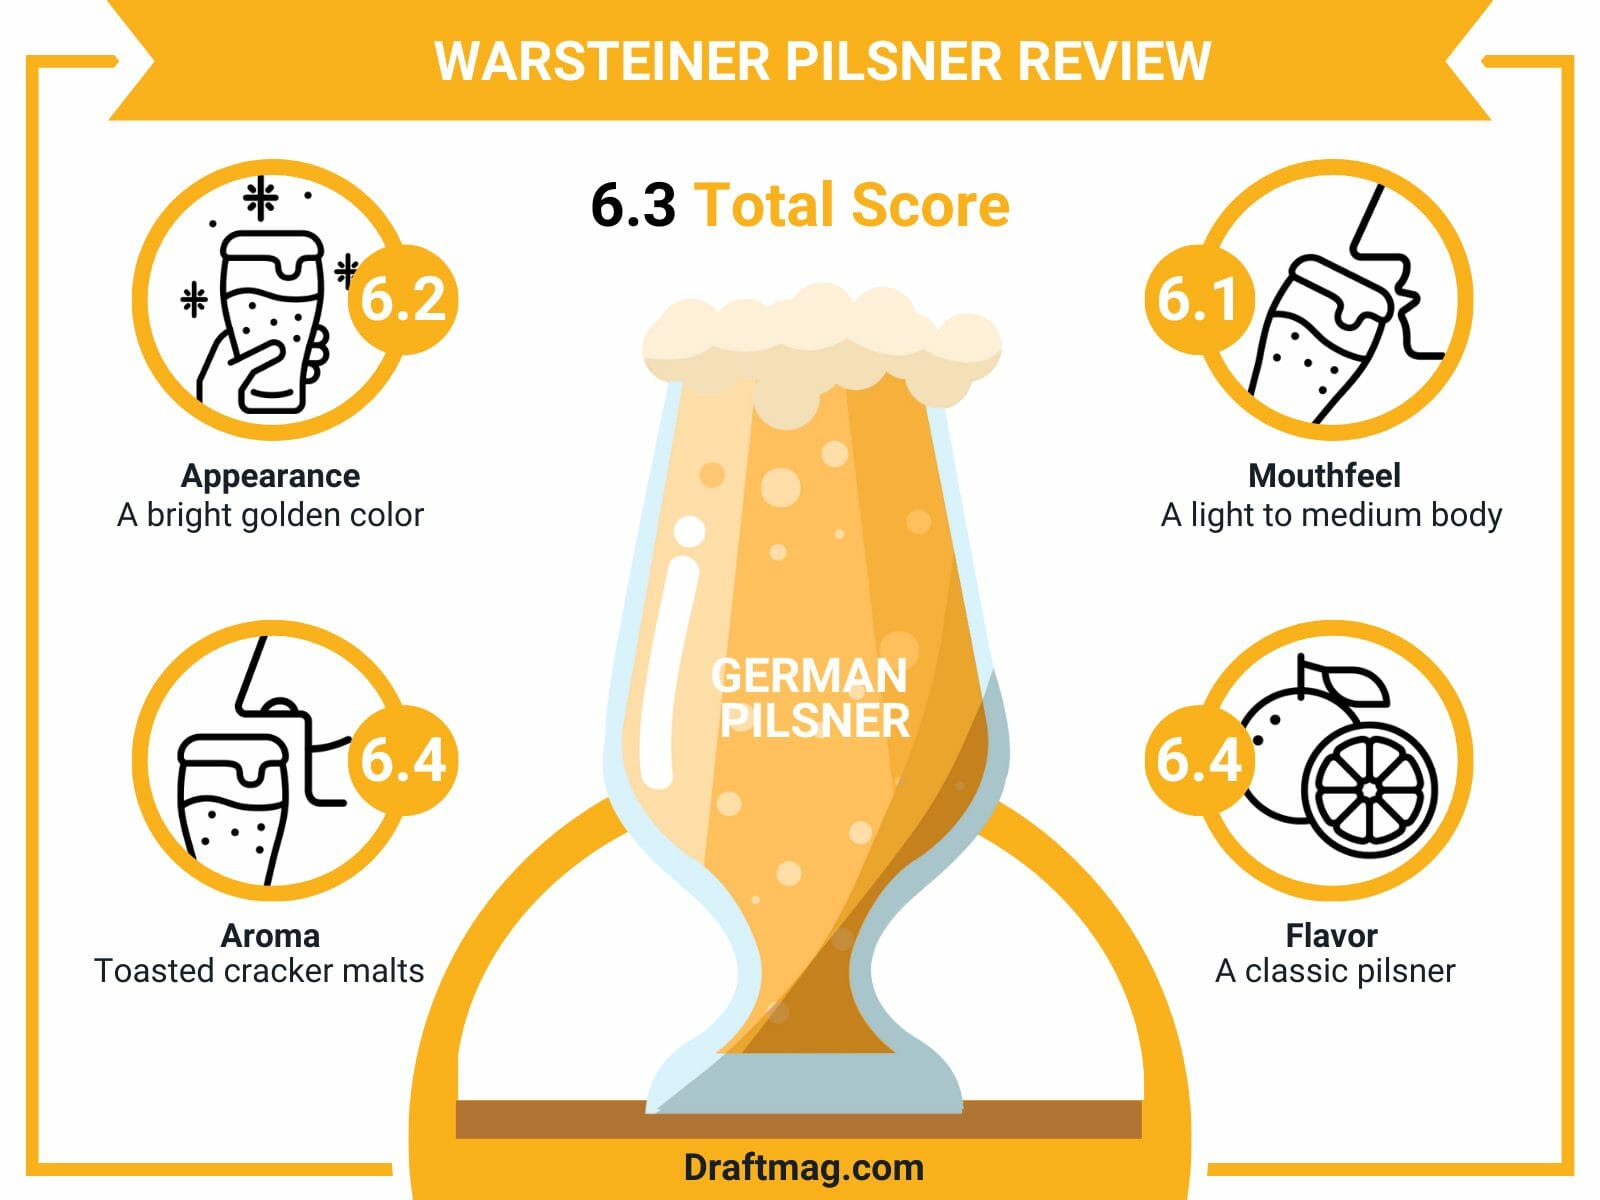 Warsteiner pilsner review infographic